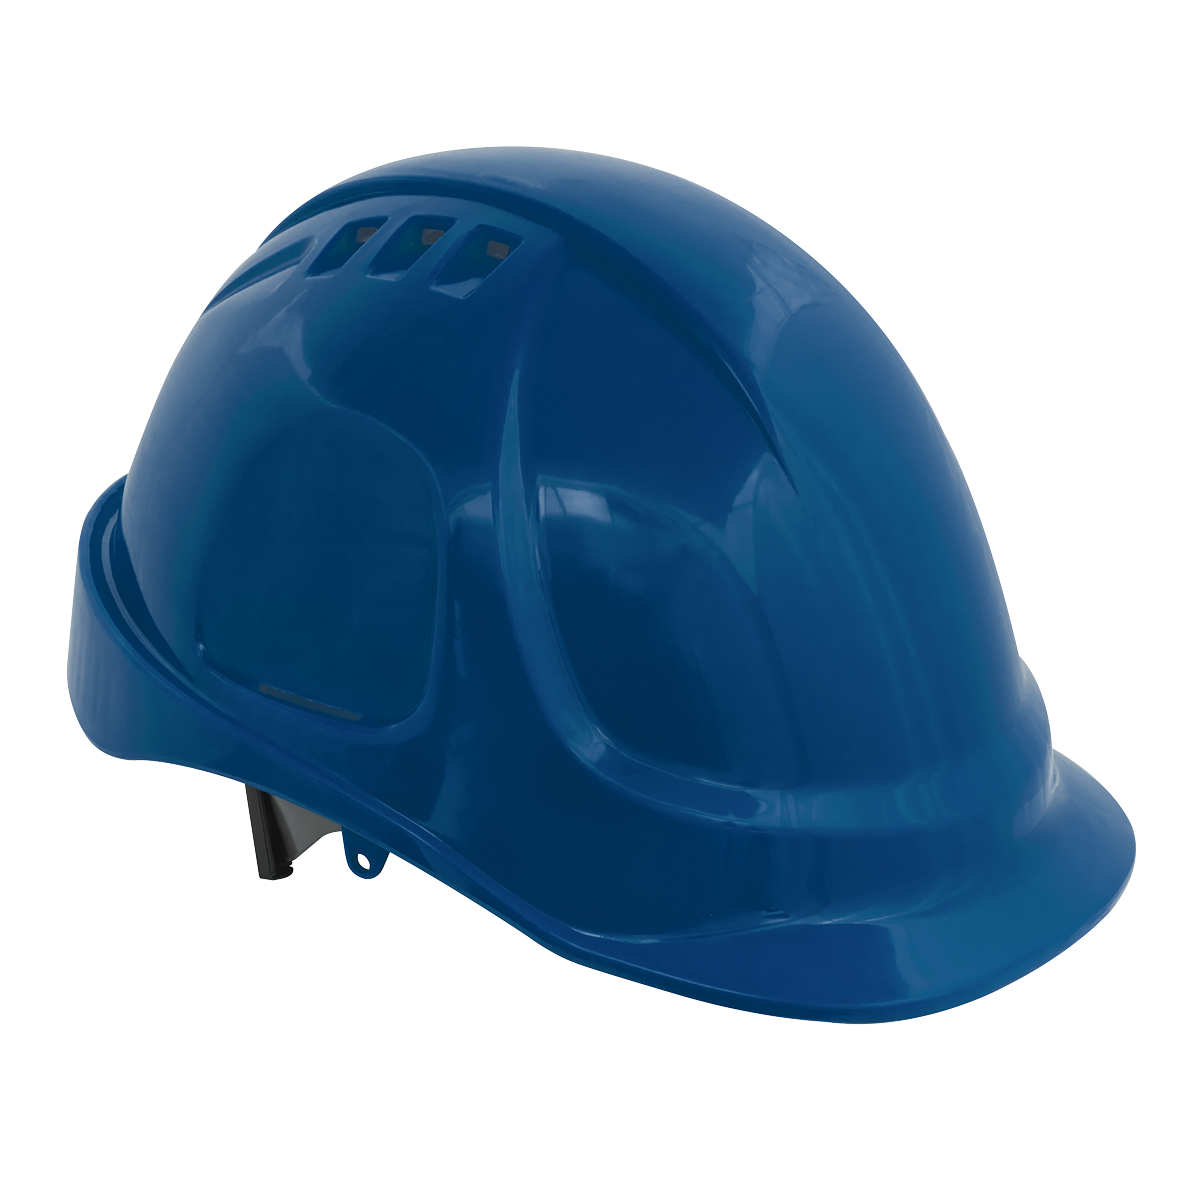 Sealey Safety Helmet - Vented (Blue)